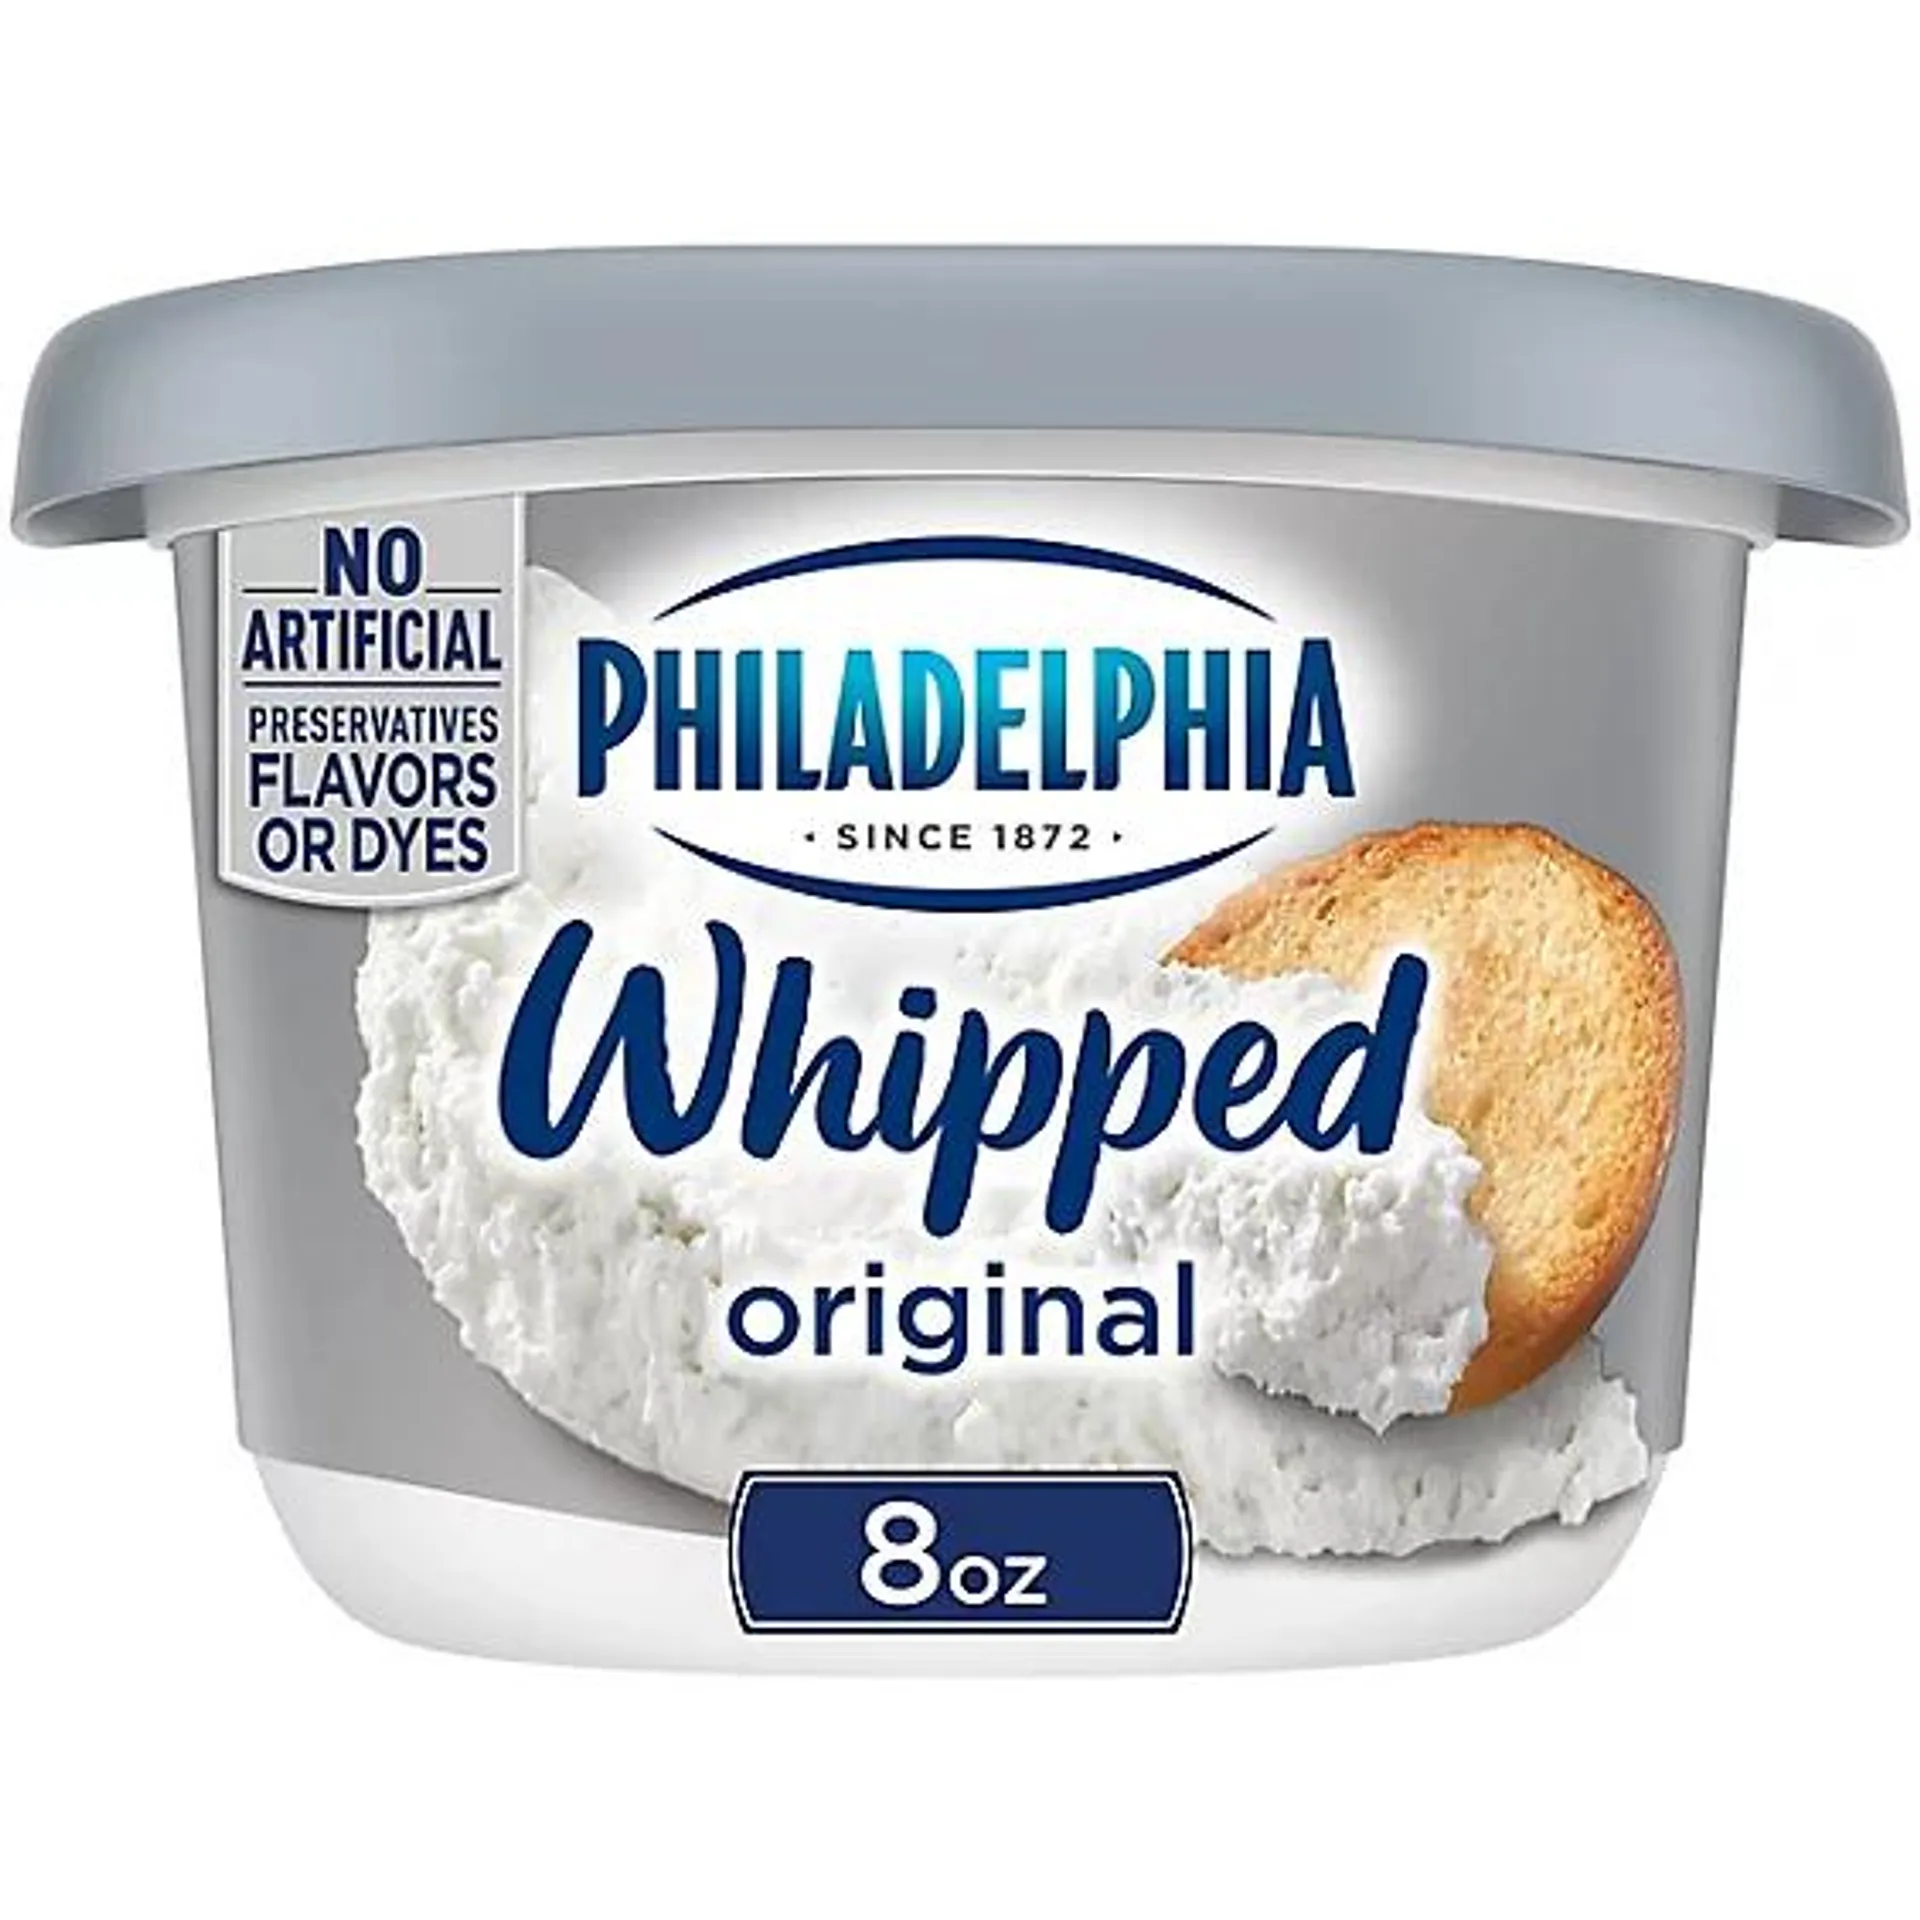 Philadelphia Original Whipped Cream Cheese Spread Tub - 8 Oz